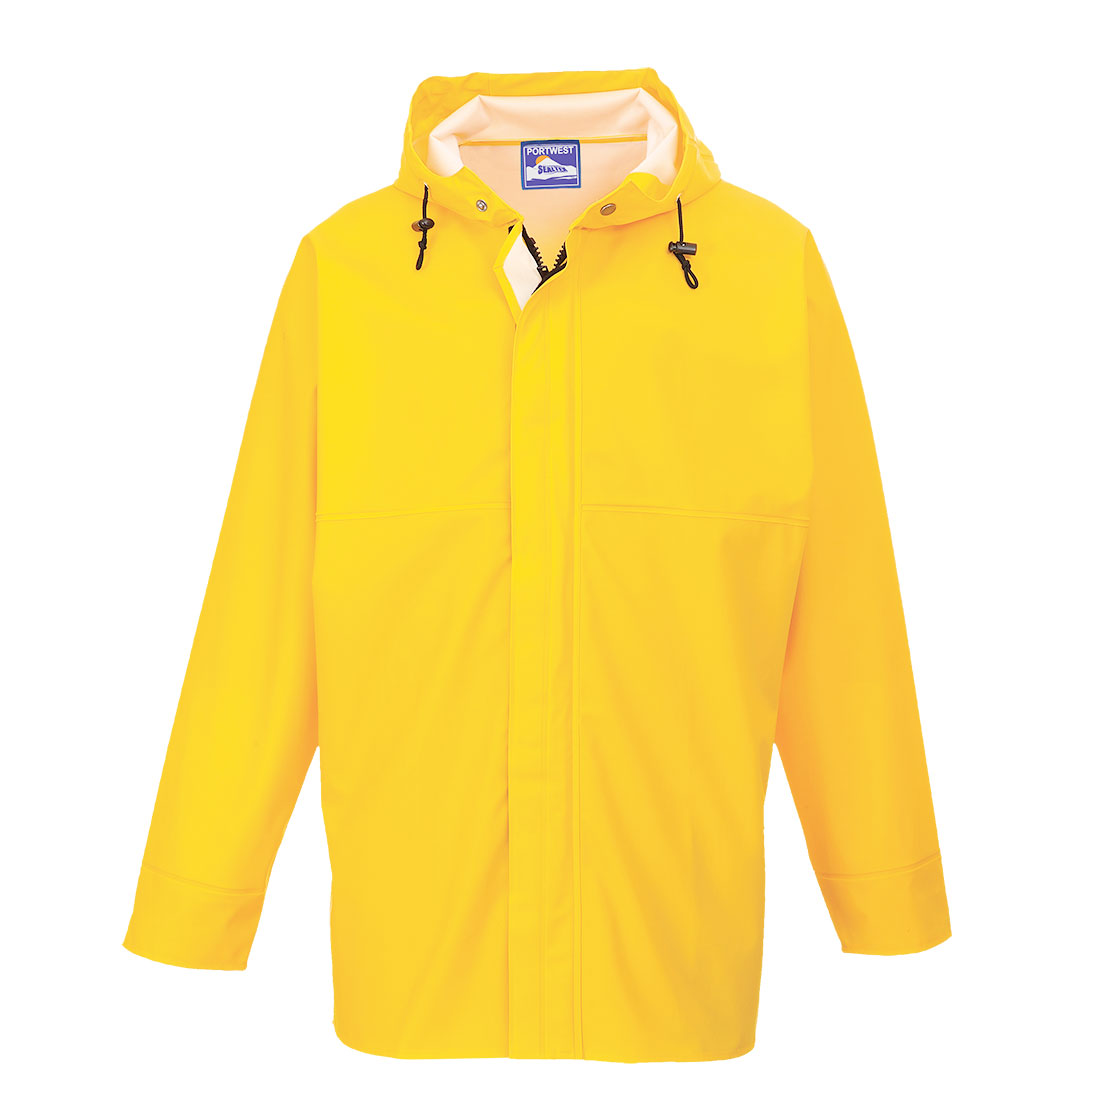 Sealtex Ocean Jacket, Yellow     Size Medium R/Fit